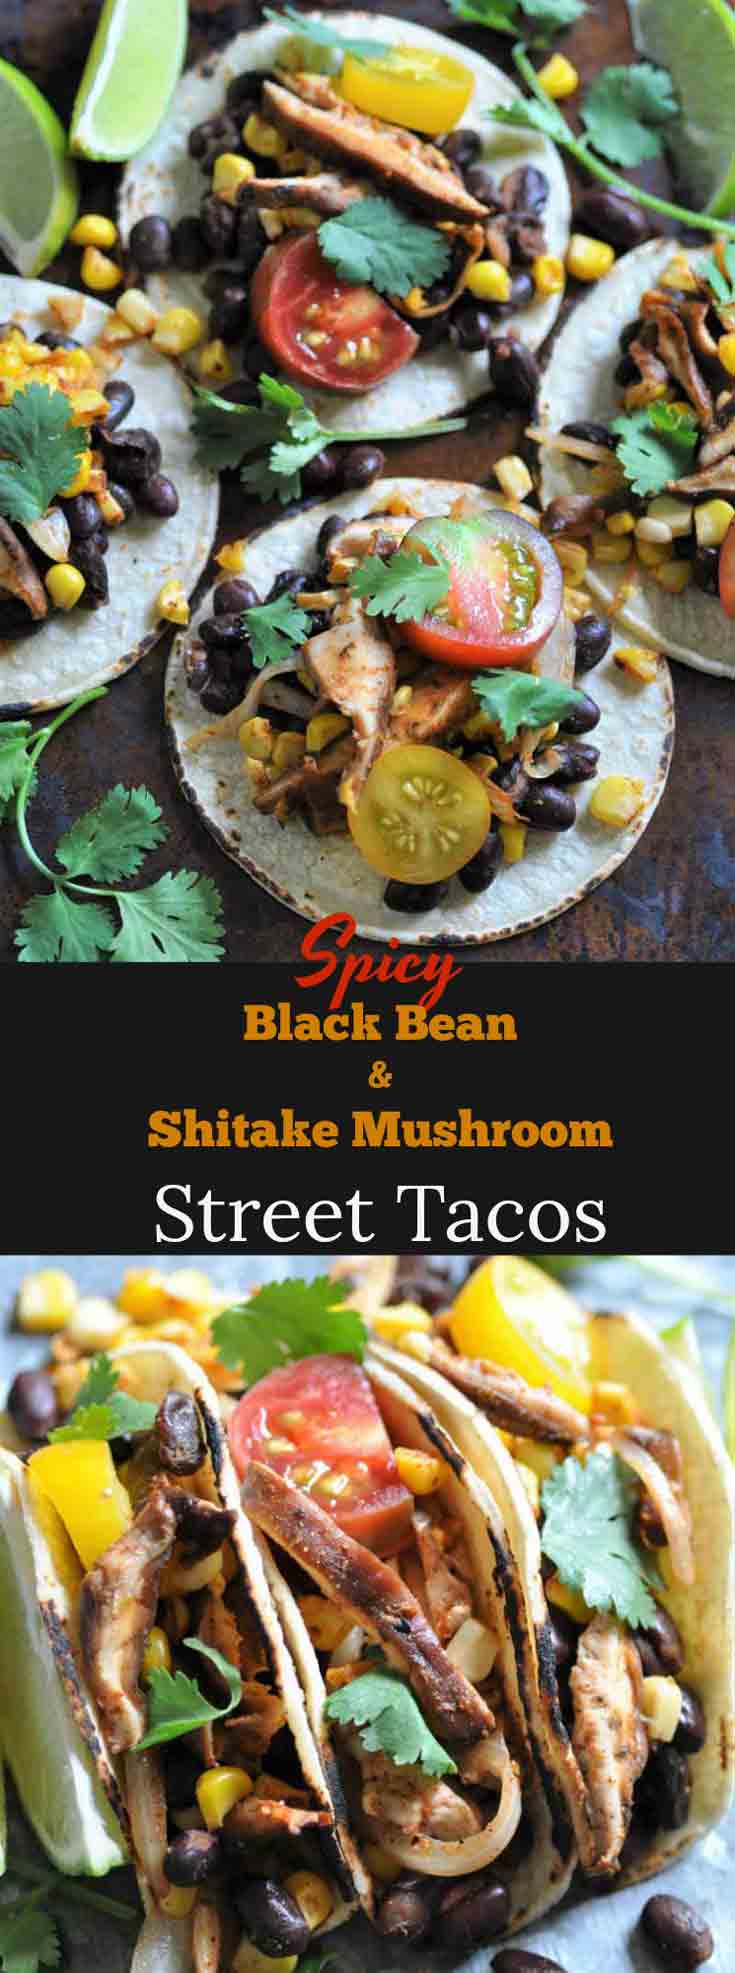 Black bean, corn, & shitake mushroom street tacos! The perfect appetizer or meal.